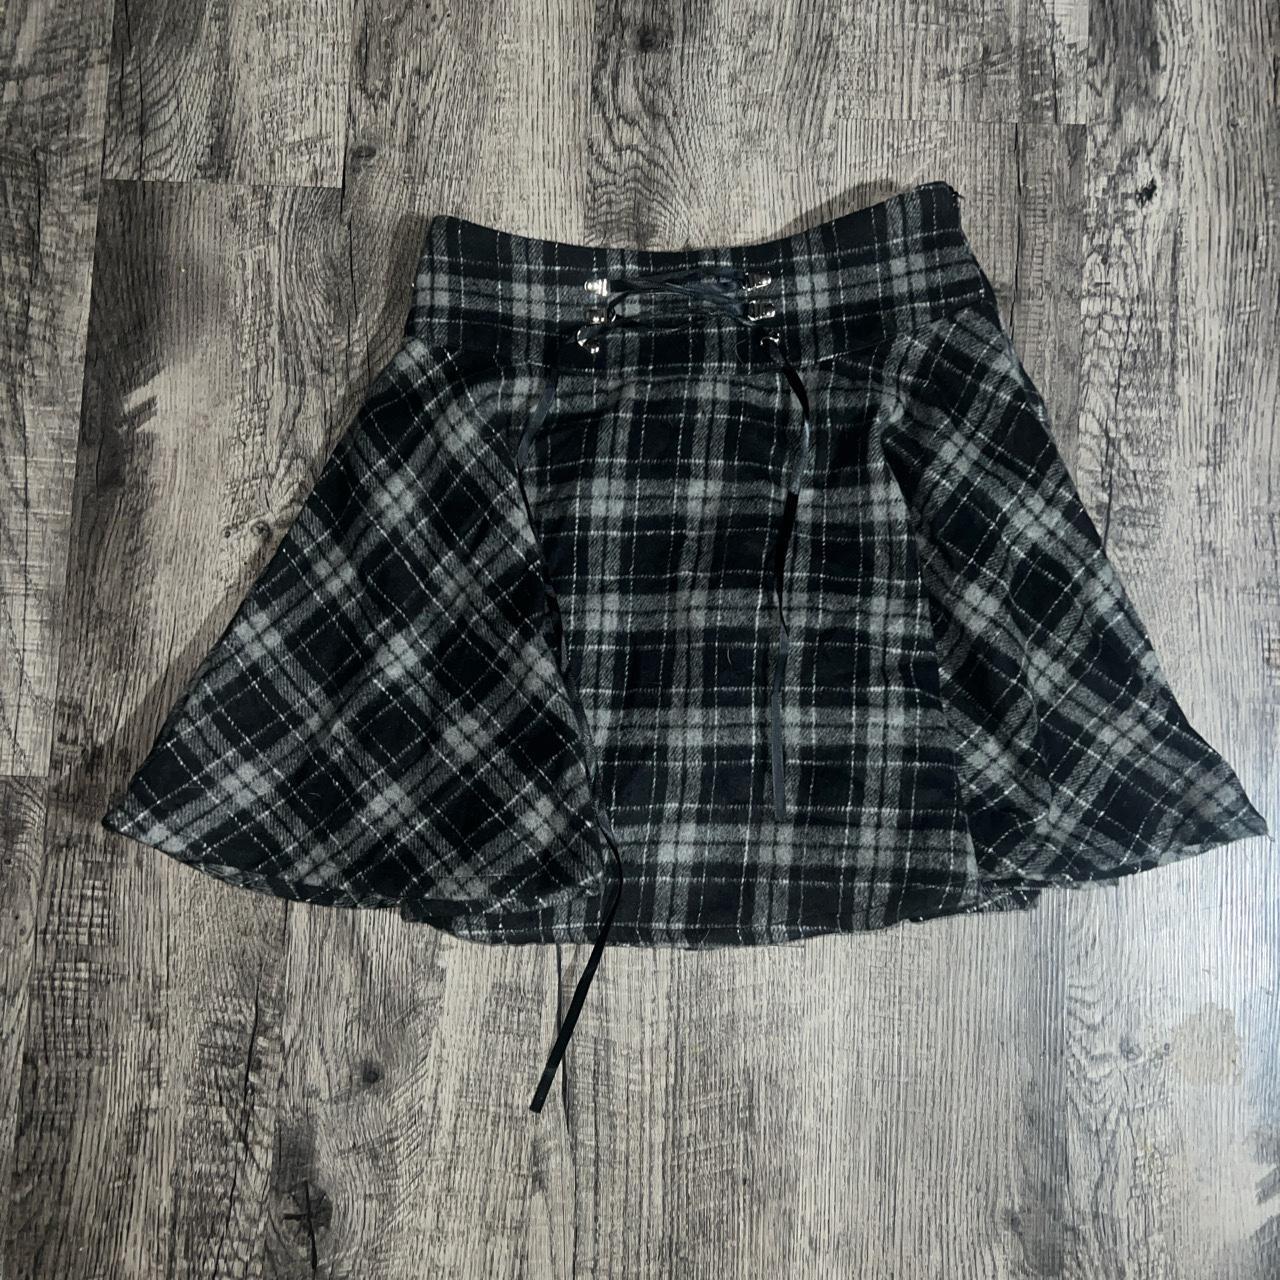 Black and grey plaid skirt - Depop